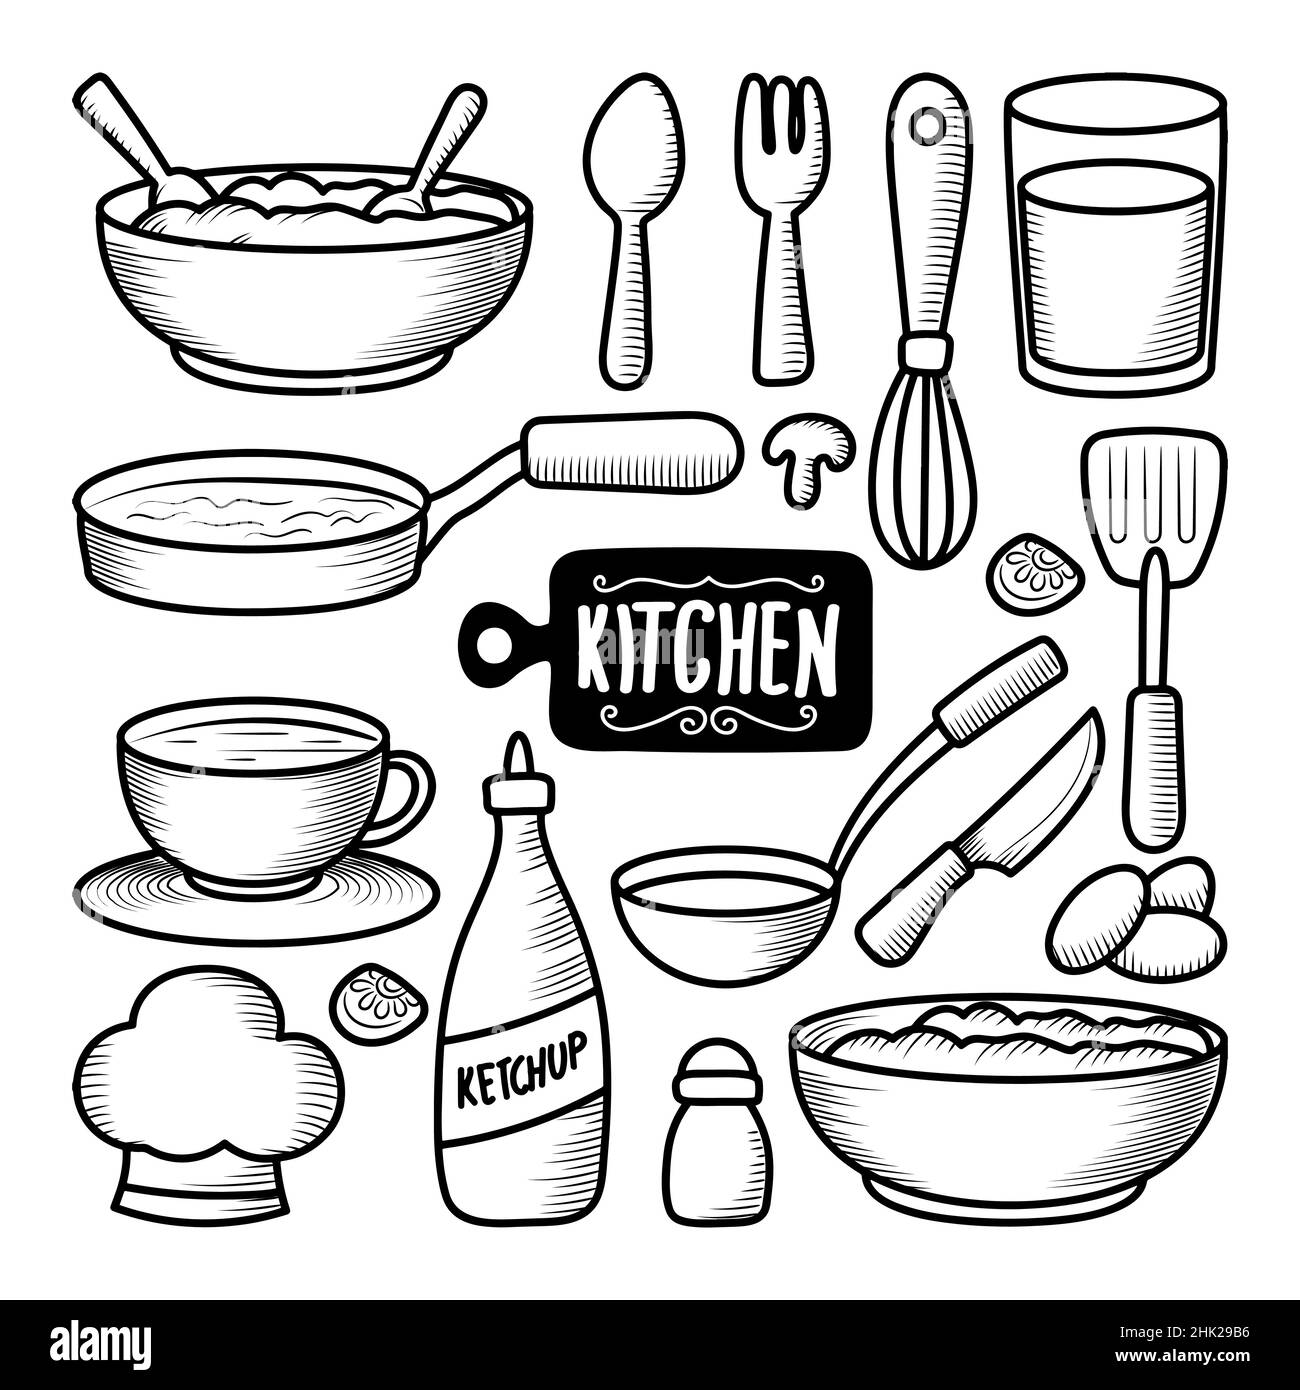 https://c8.alamy.com/comp/2HK29B6/collections-of-kitchen-utensils-hand-drawn-doodle-elements-2HK29B6.jpg